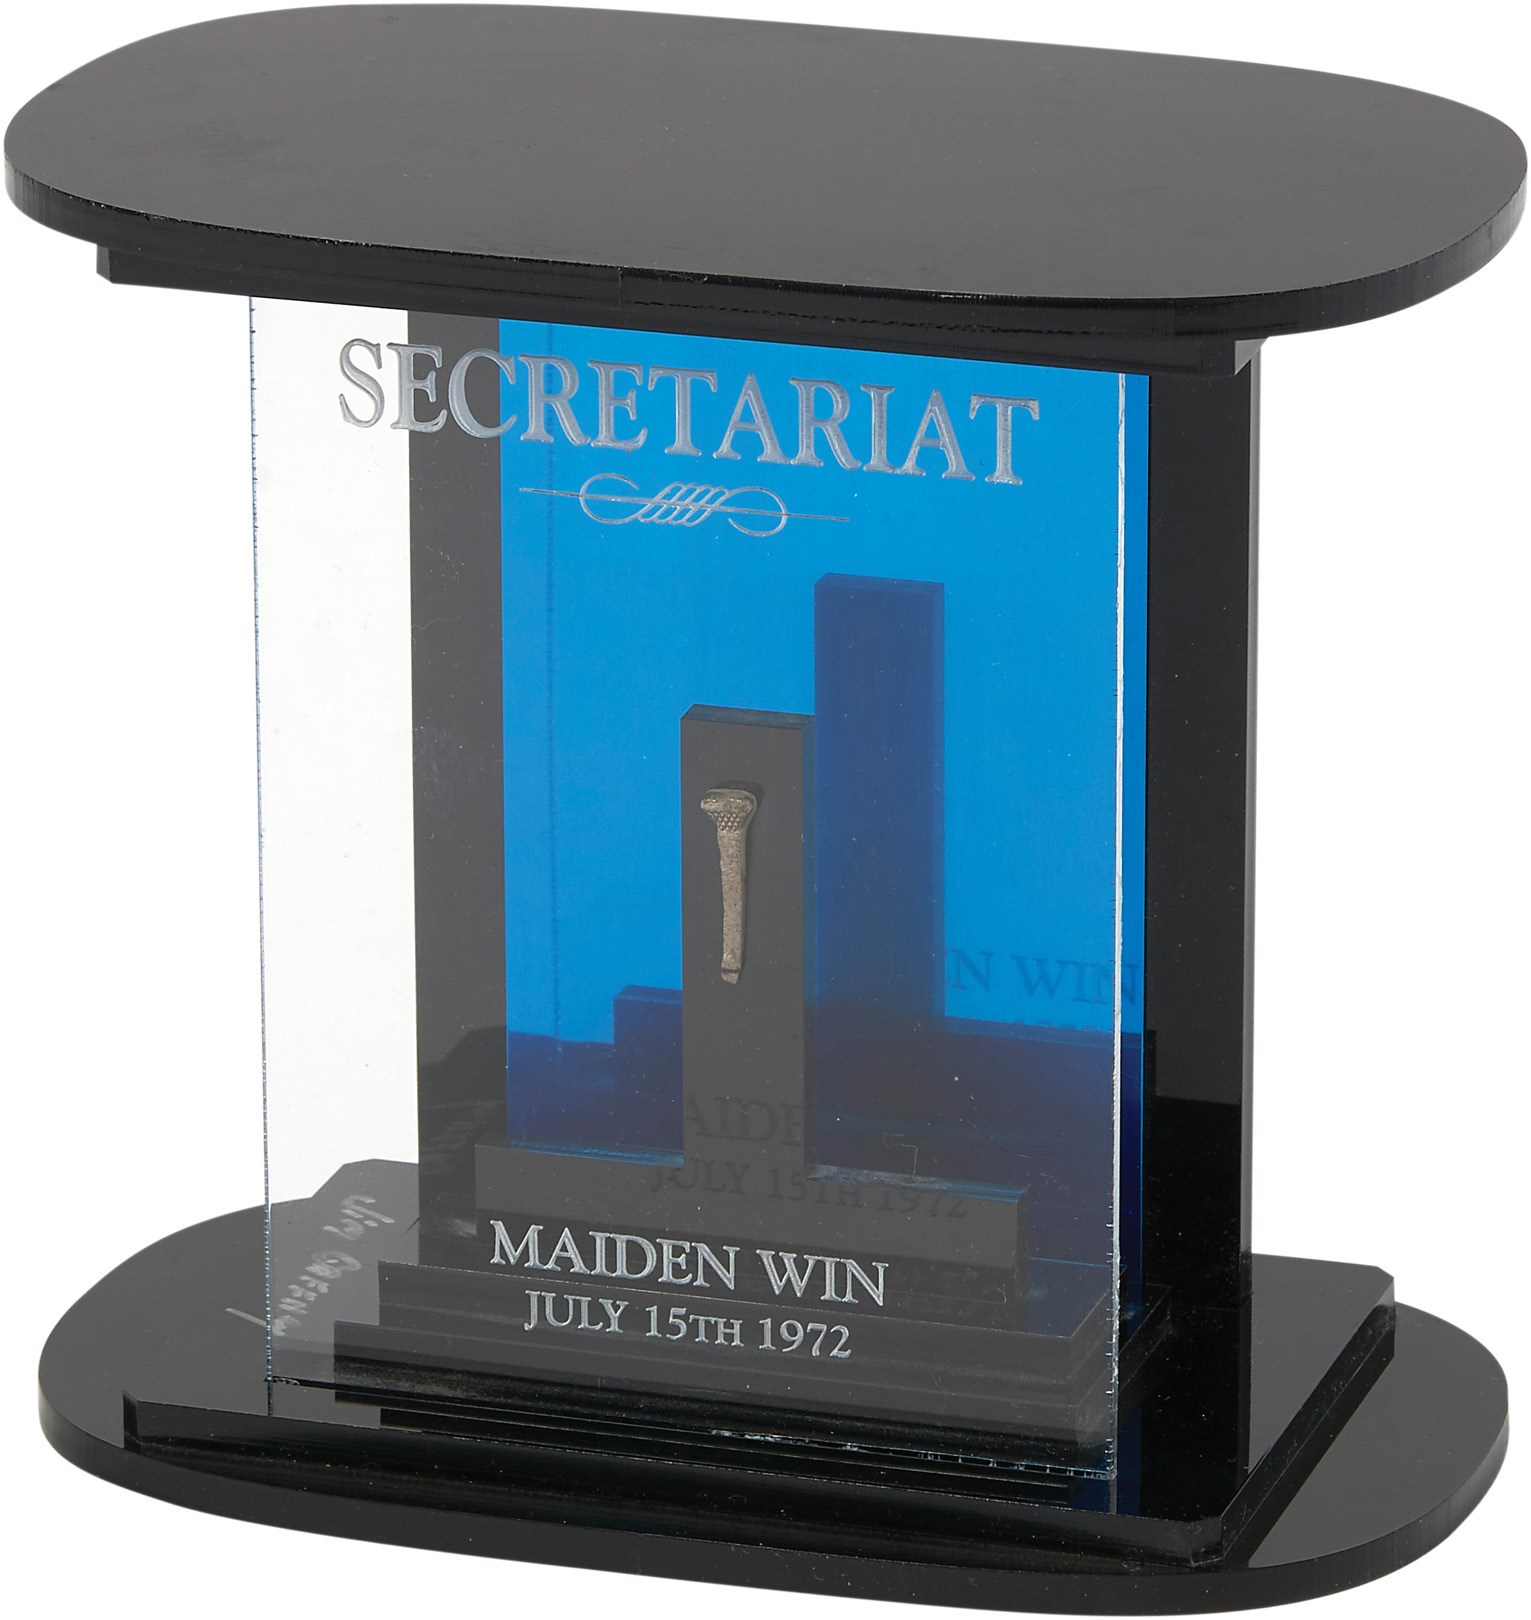 1972 Secretariat Maiden Win Nail